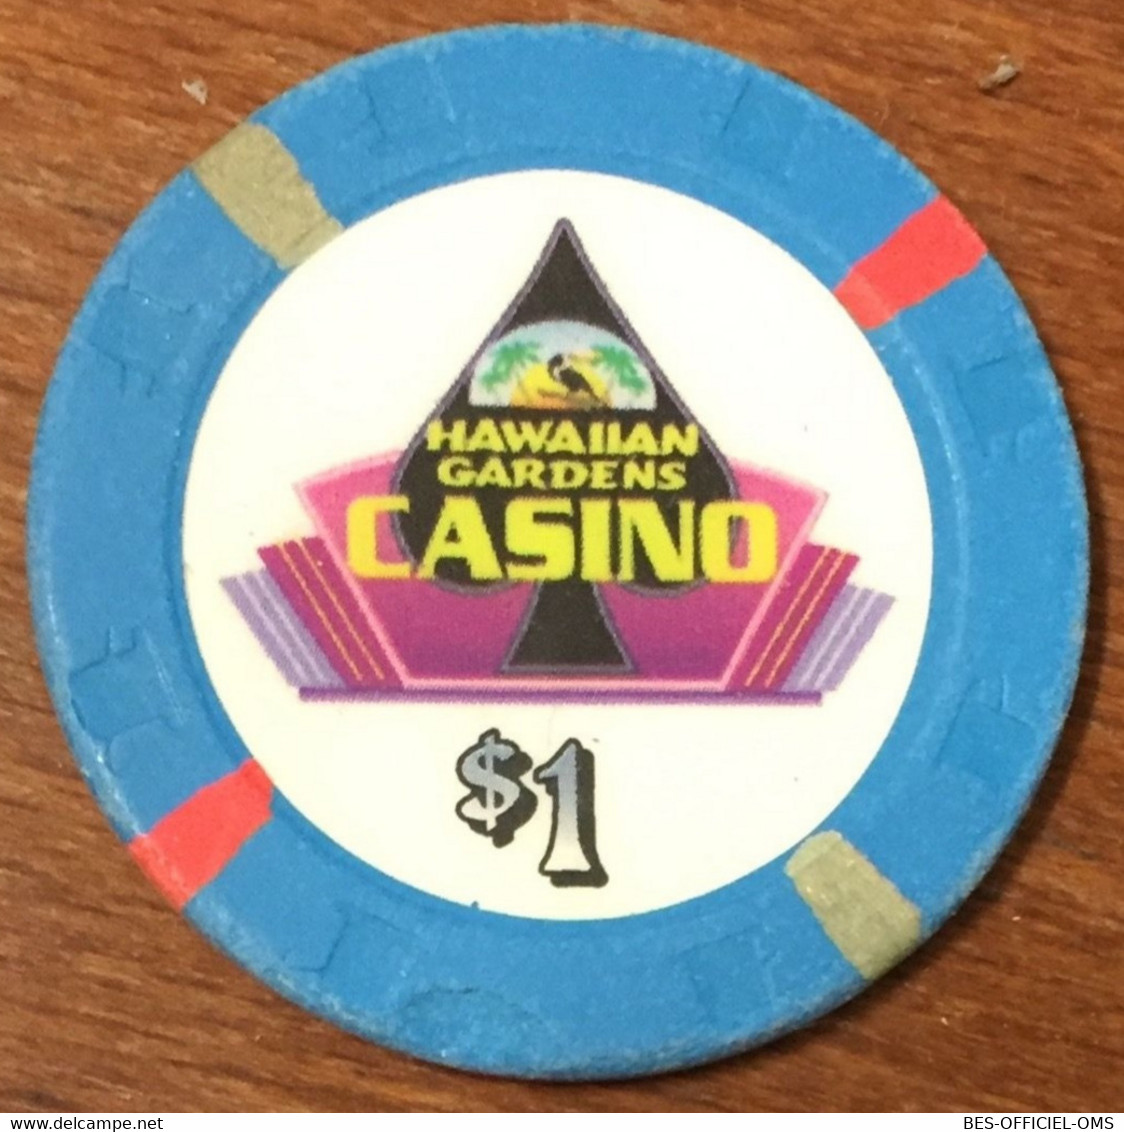 ÉTATS-UNIS USA CALIFORNIE HAWAIIAN GARDENS CASINO CHIP $ 1 JETON TOKENS COINS GAMING - Casino